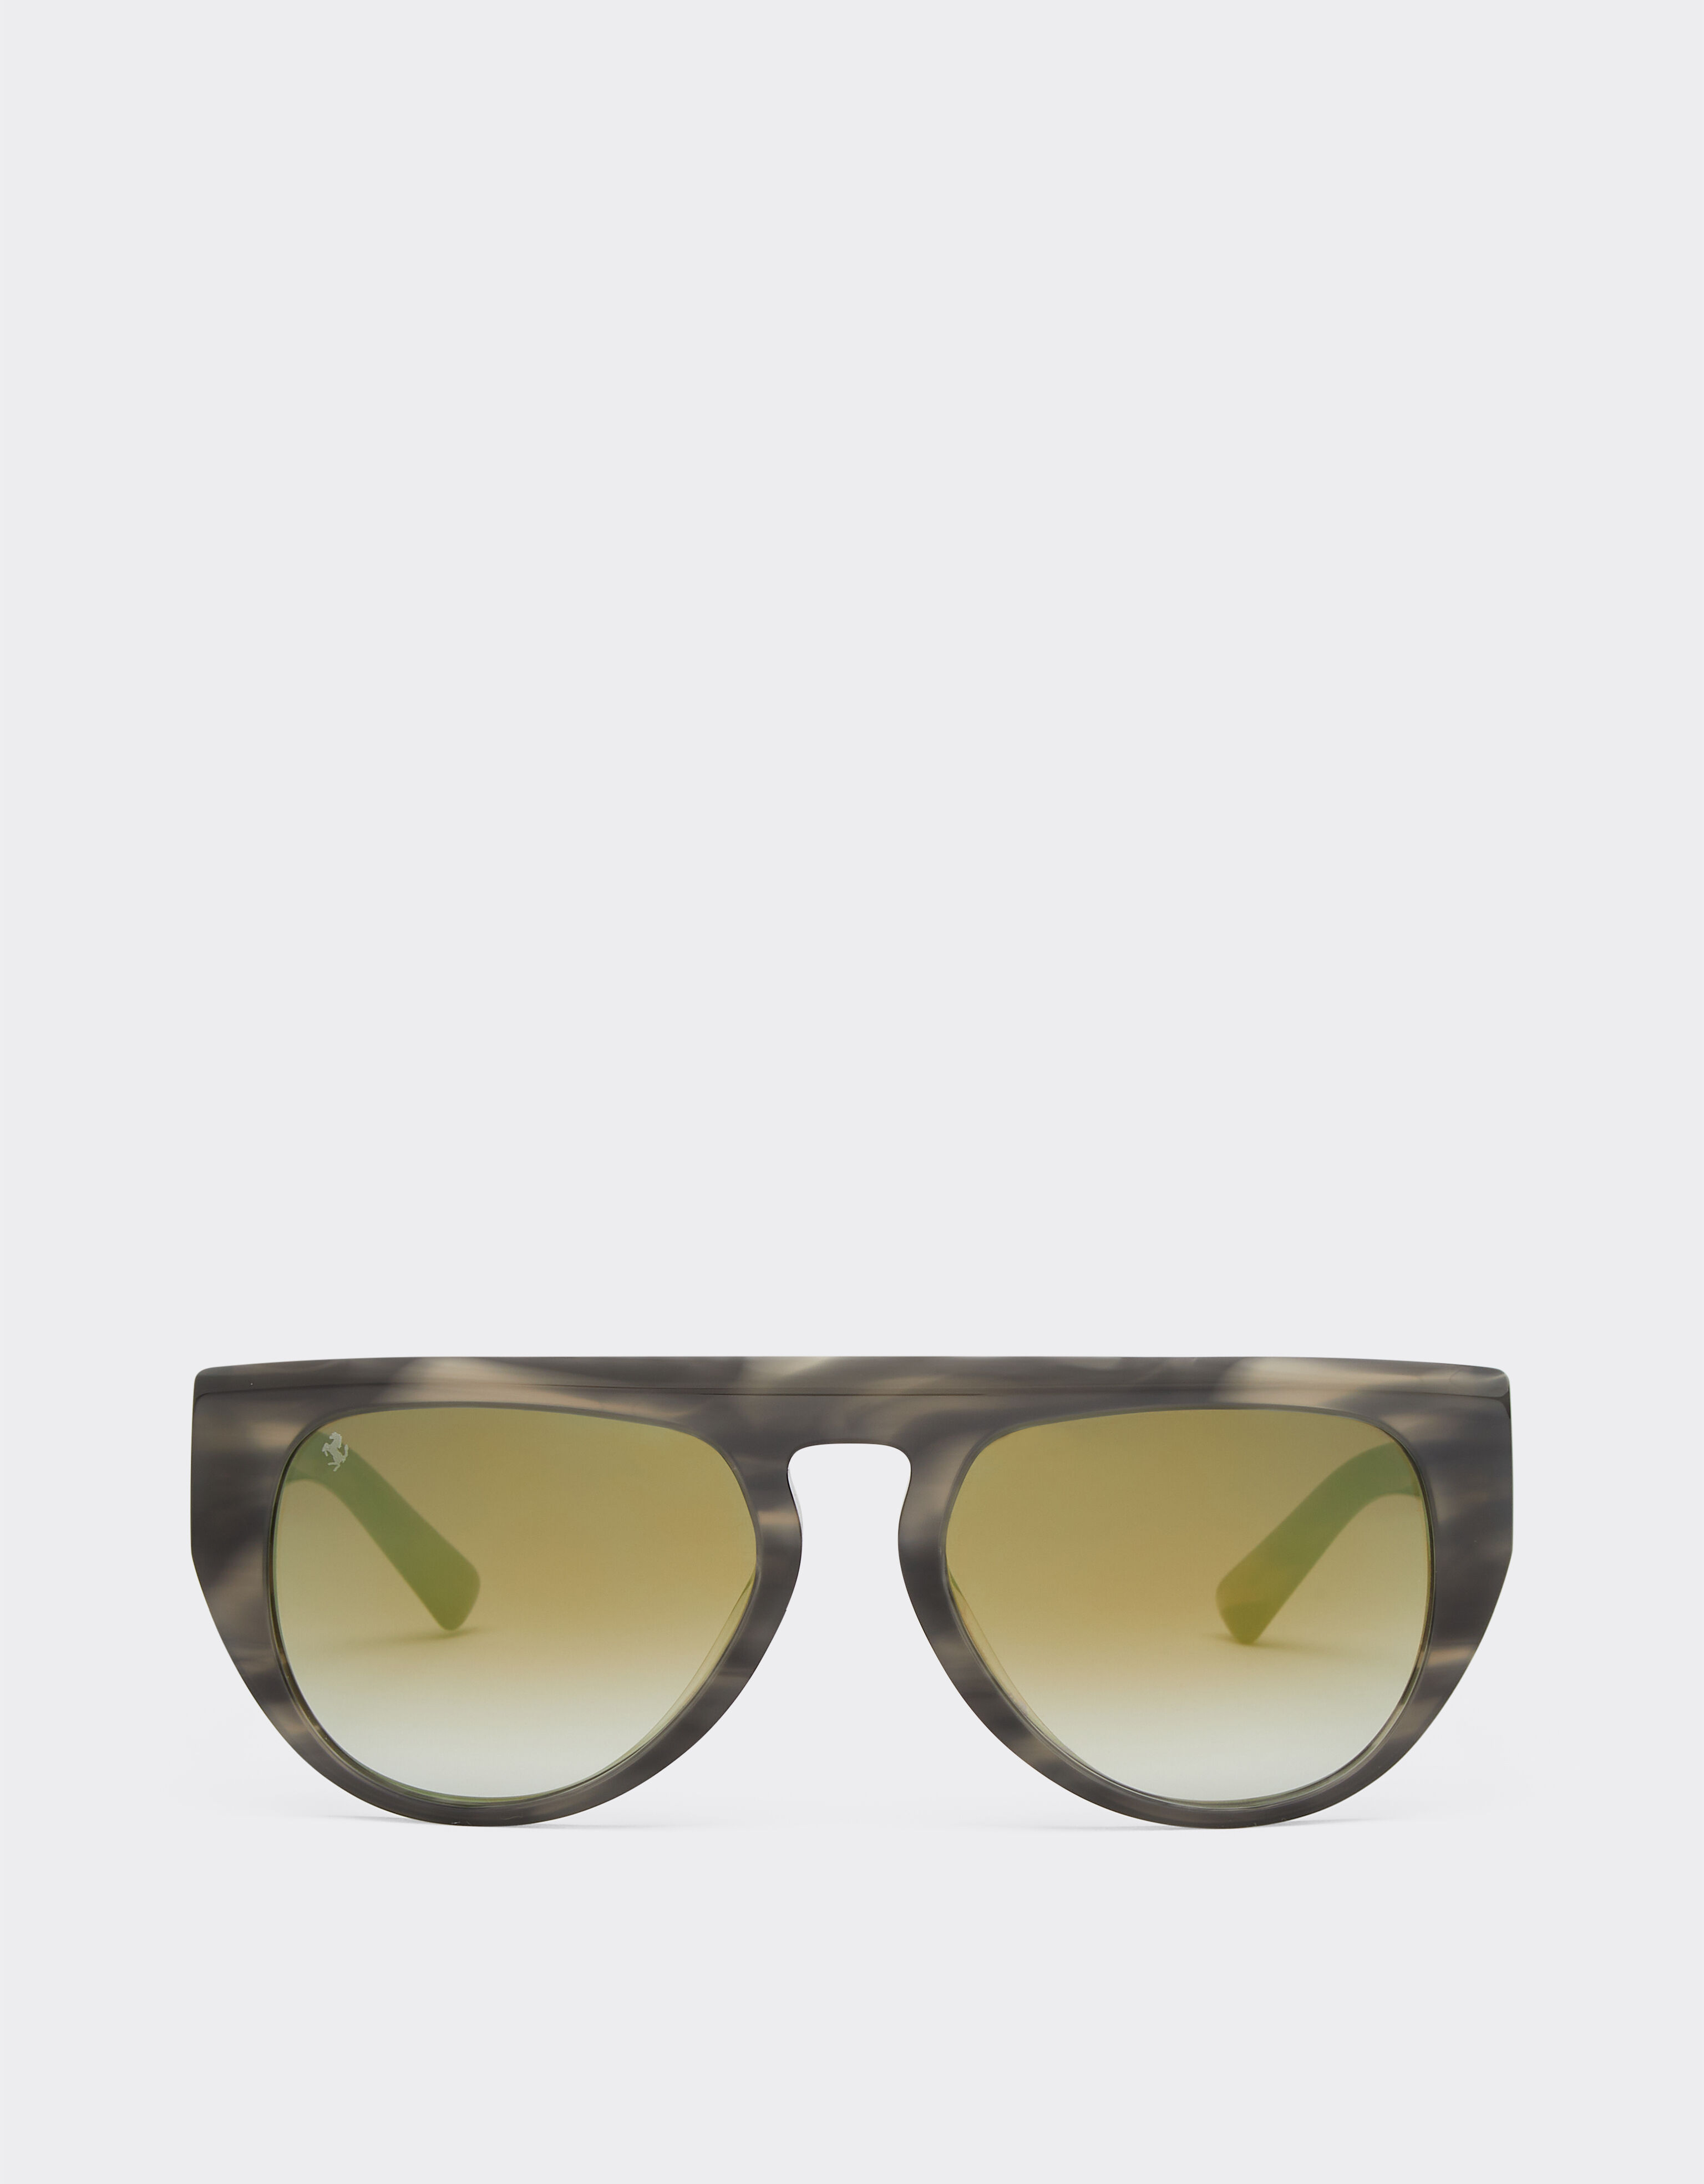 Ferrari Ferrari sunglasses in grey striped acetate with mirror lenses Black Matt F1250f